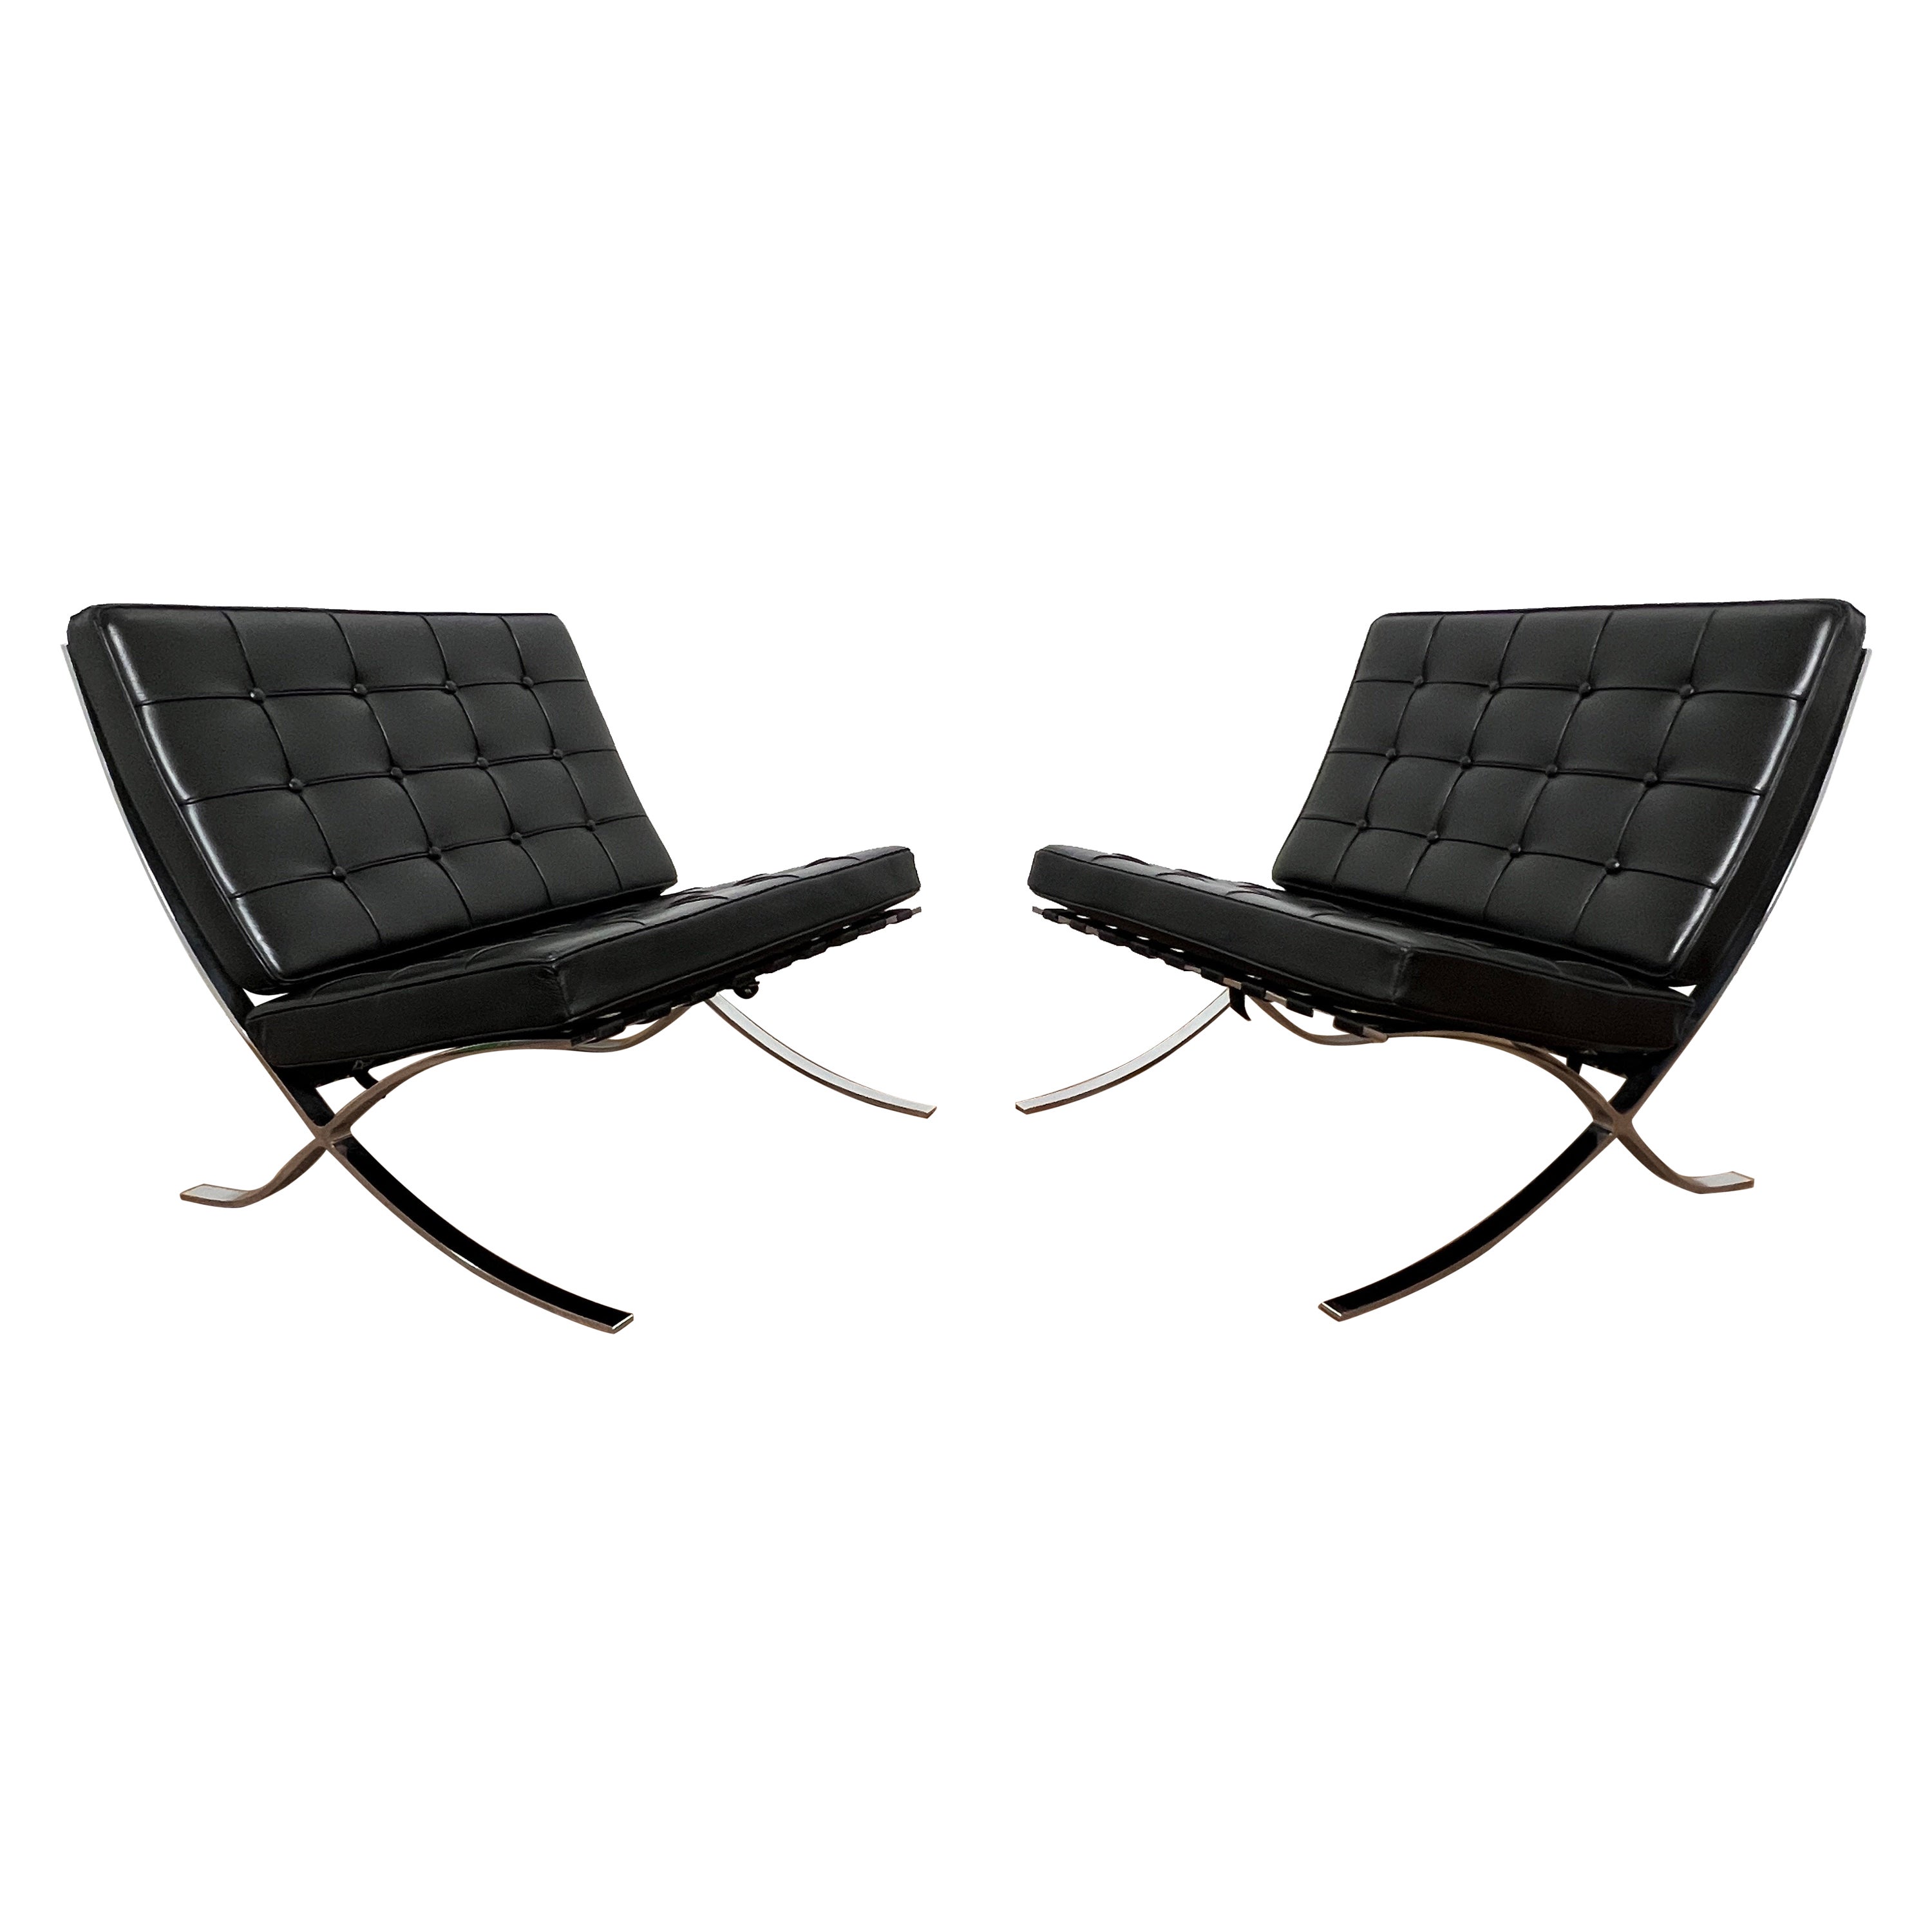 Pair of Italian Barcelona Leather Lounge Chairs by Gordon International C. 1990s